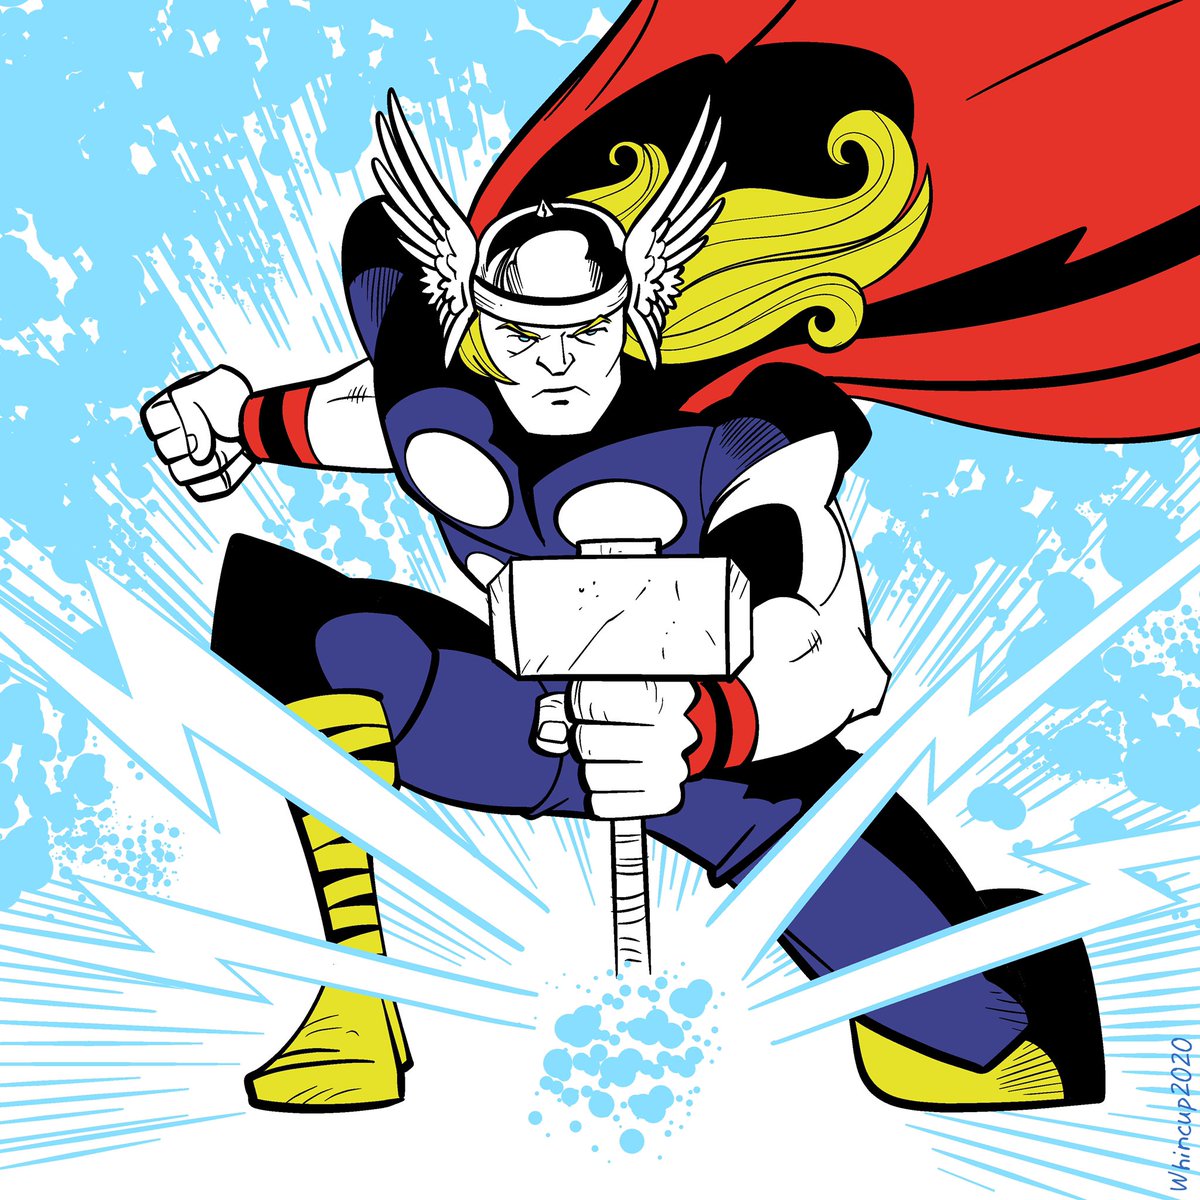 #jacktober — day 5: Thor #jacktober2020 #jacktoberart #jackkirby #jackkirbyart #thor #avengers #avengersassemble #thundergod #chrishemsworth #marvel #marvelcomics #mcu #comics #comicbooks #comicart #superhero #superheroart #comic #comicbookart #illustration #illustrator